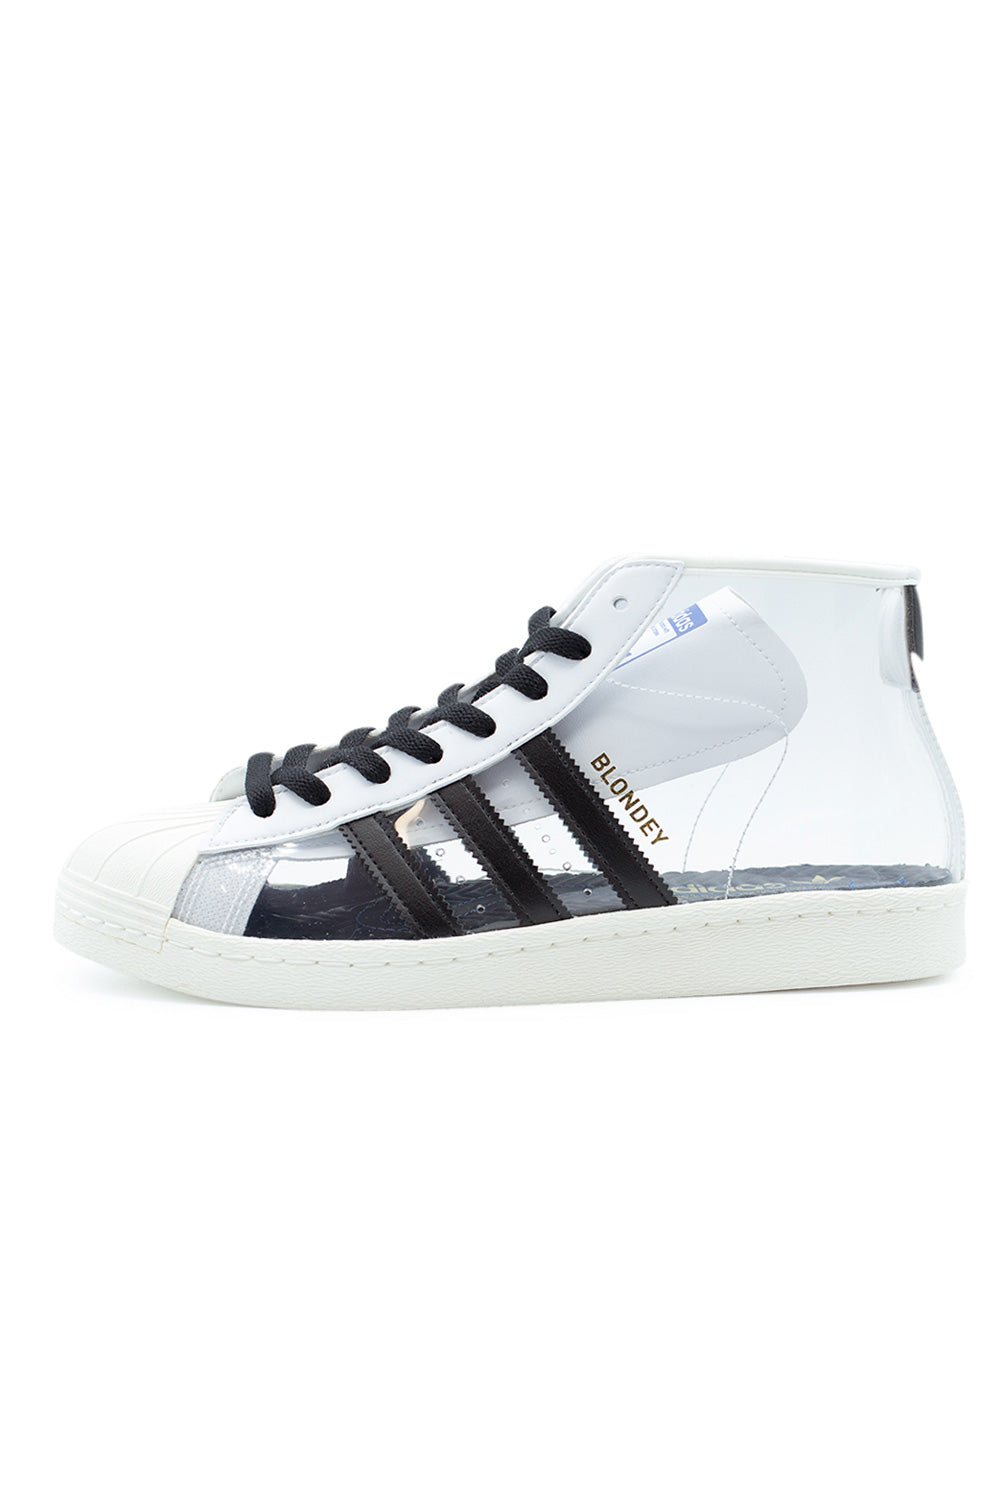 Adidas Pro Model Shoe (Blondey McCoy) Footwear White / Core Black / Off White - BONKERS